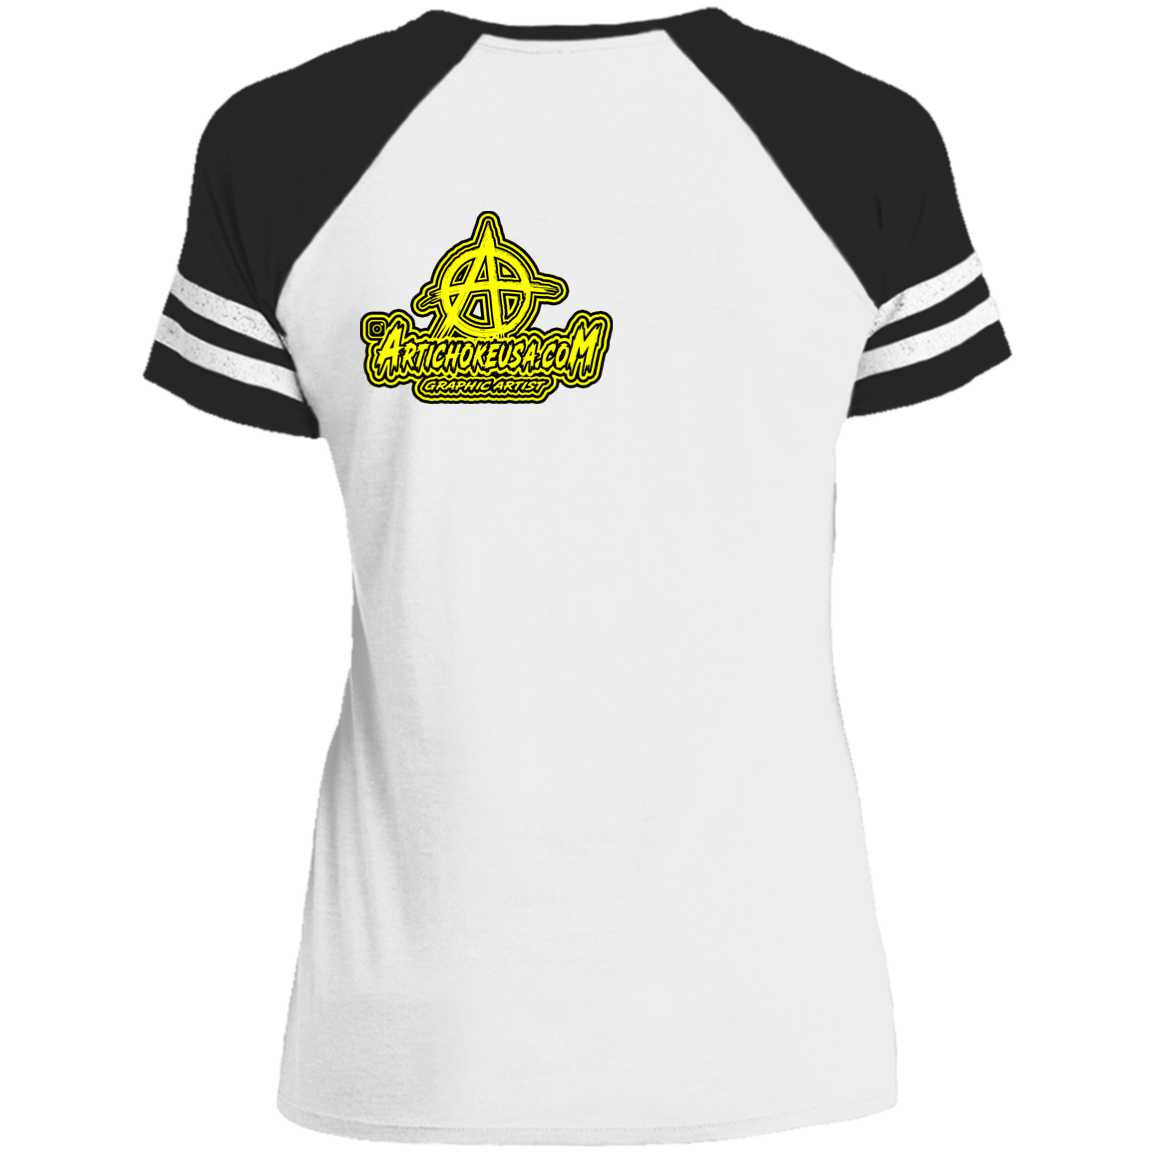 ArtichokeUSA Custom Design. I am the Stig. Vader/ The Stig Fan Art. Ladies' Game V-Neck T-Shirt